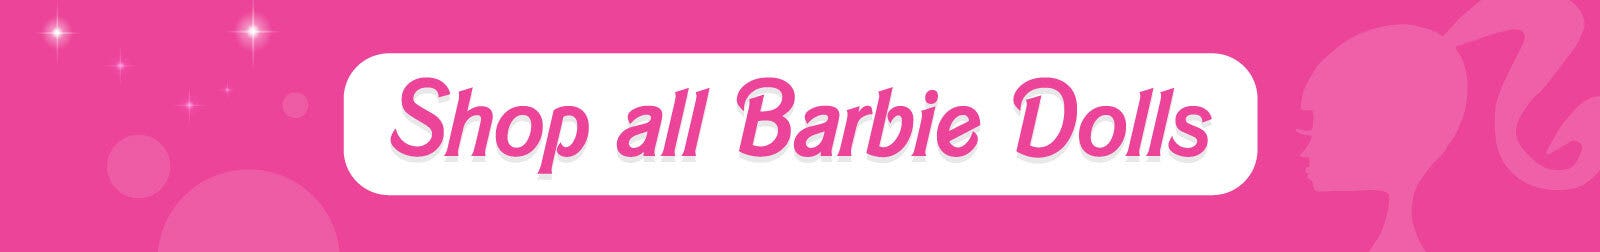 All Barbie Dolls